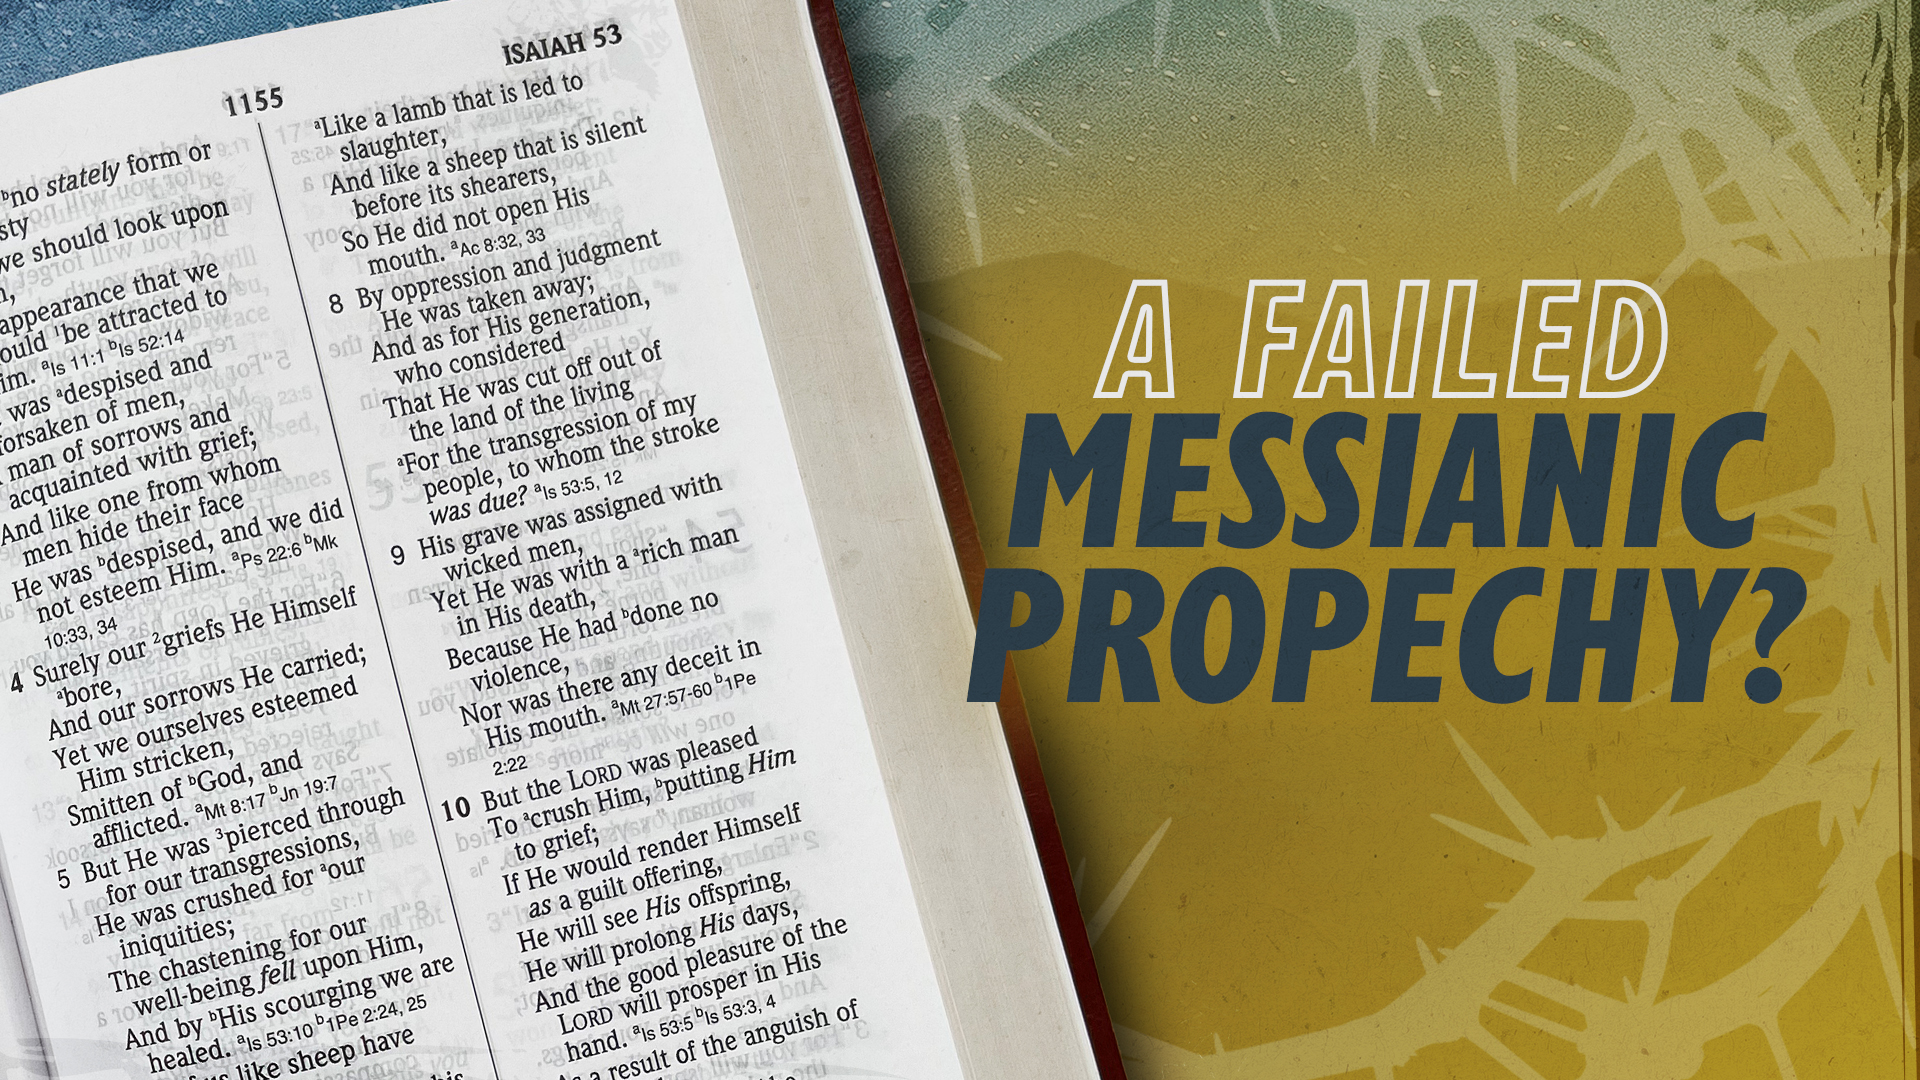 A Failed Messianic Prophecy?